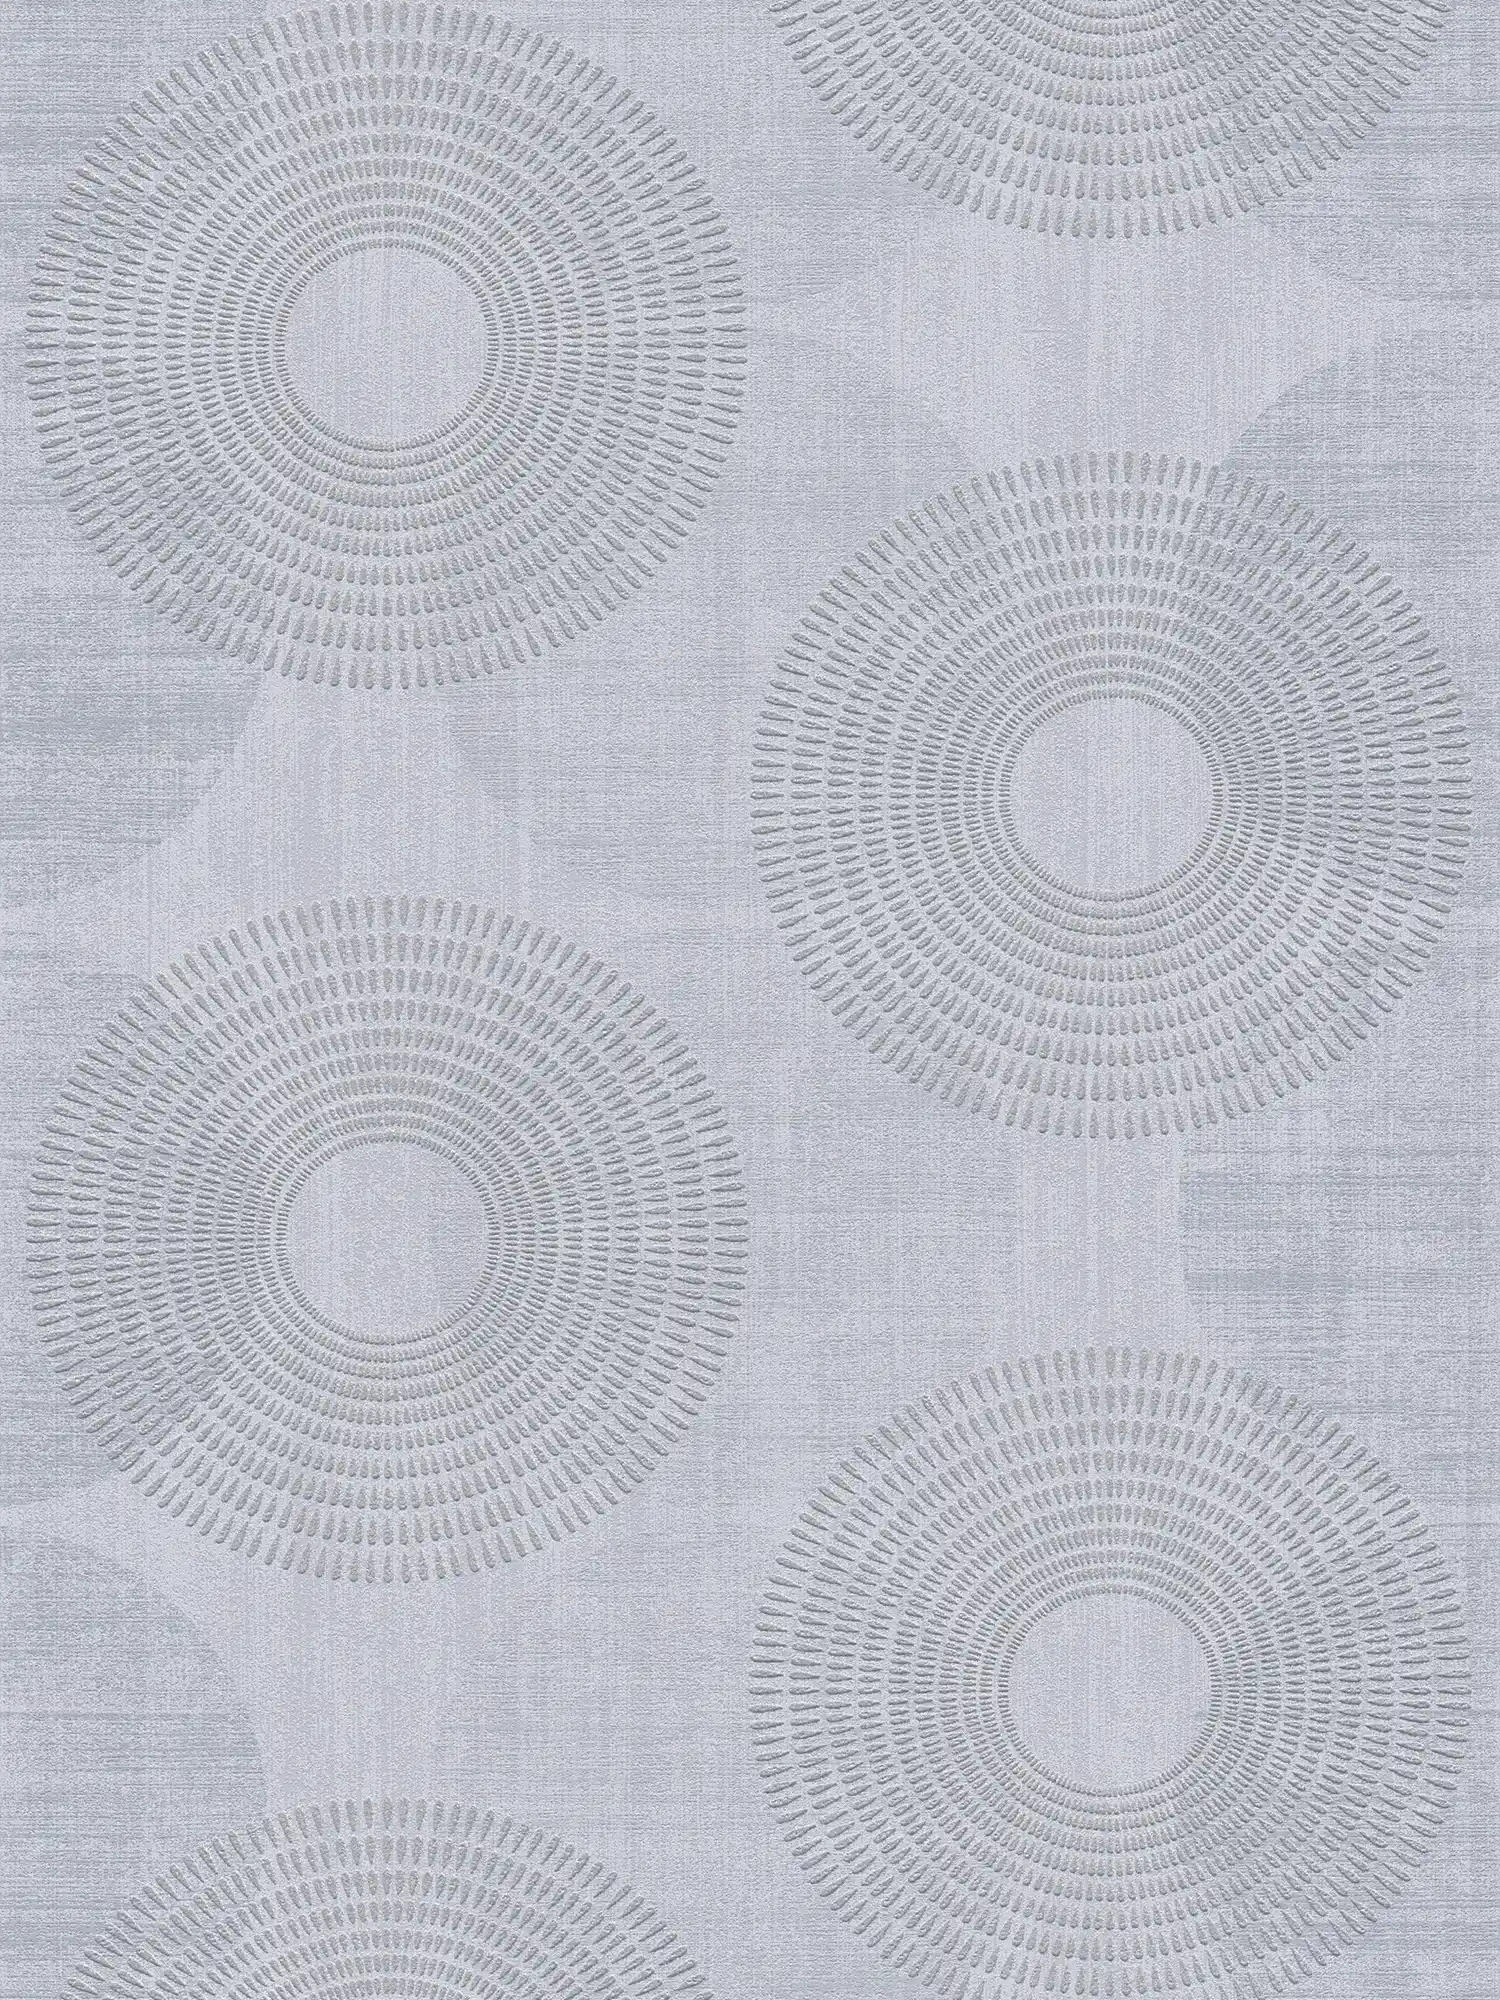 Papel pintado moderno en tejido no tejido con motivos circulares abstractos - gris
